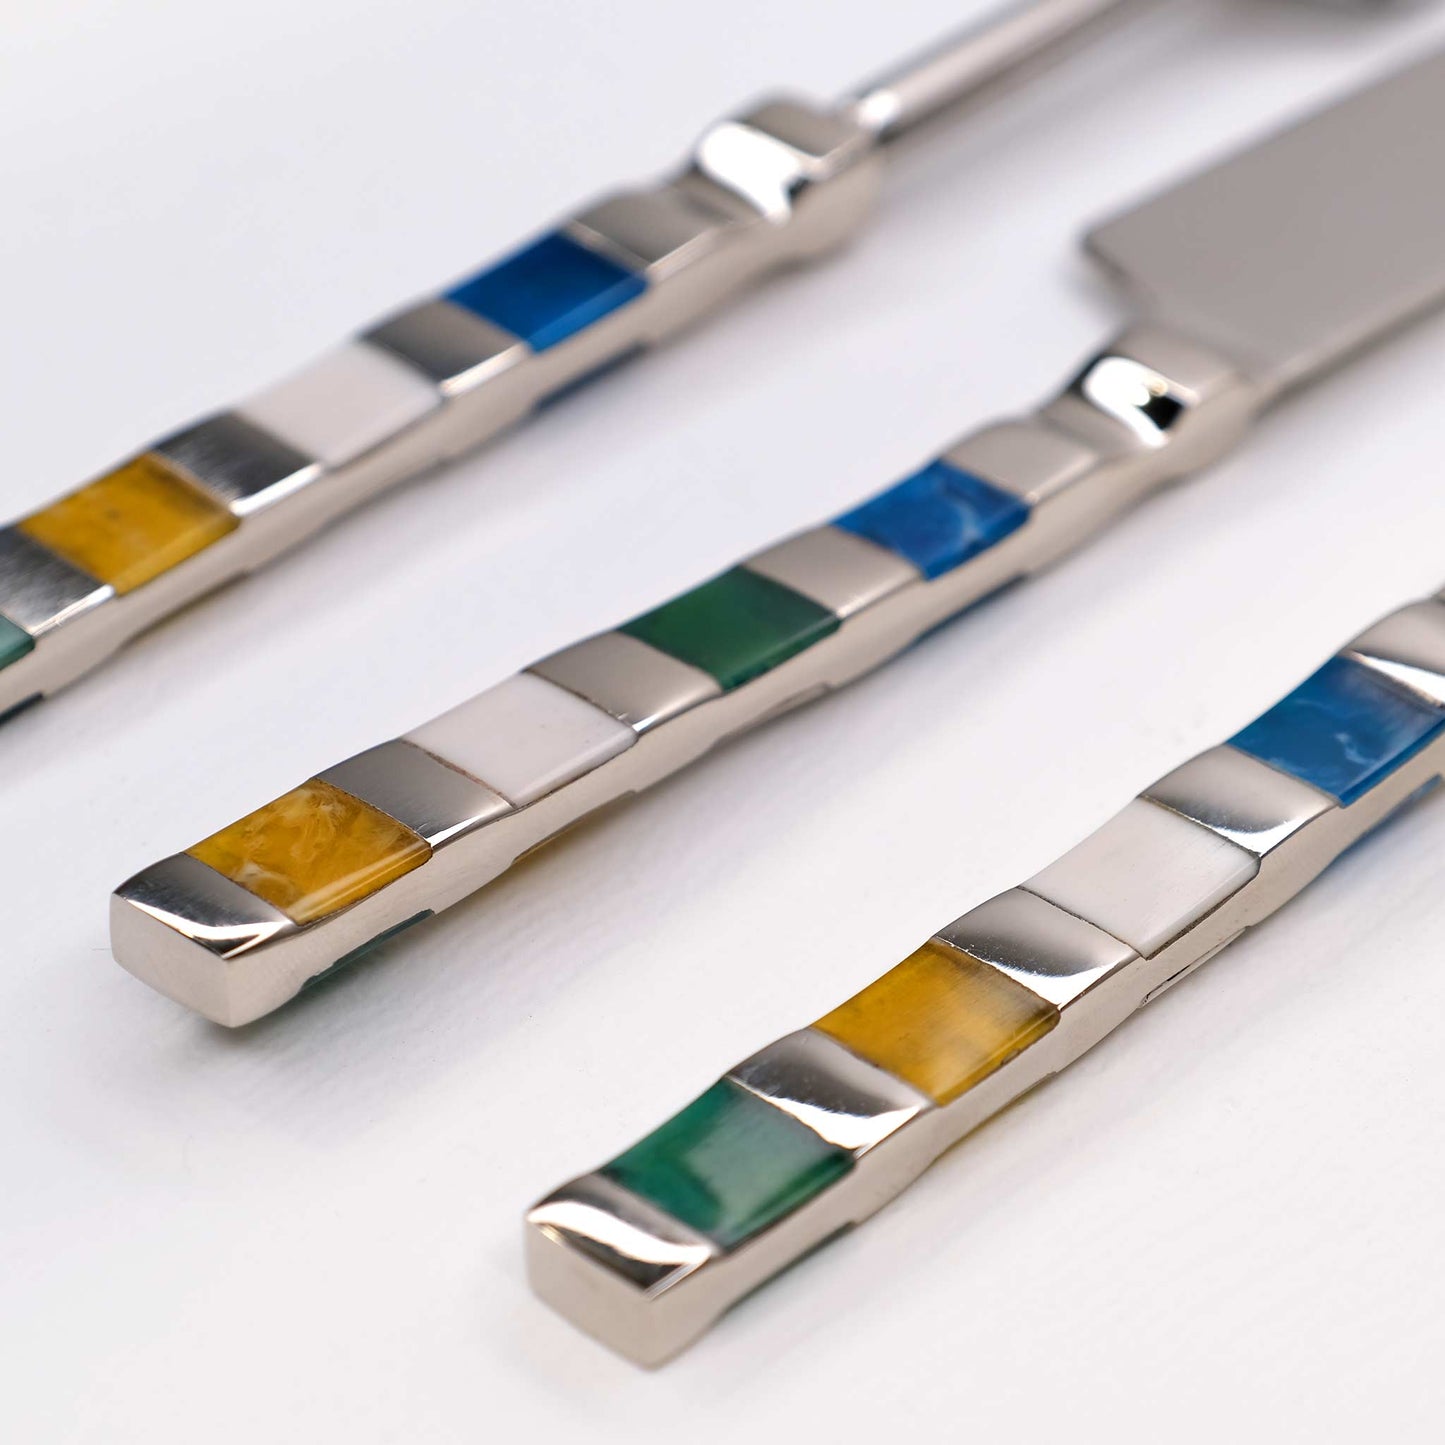 12 Piece Cutlery Set Multicolour Stainless Steel Marble & Enamel